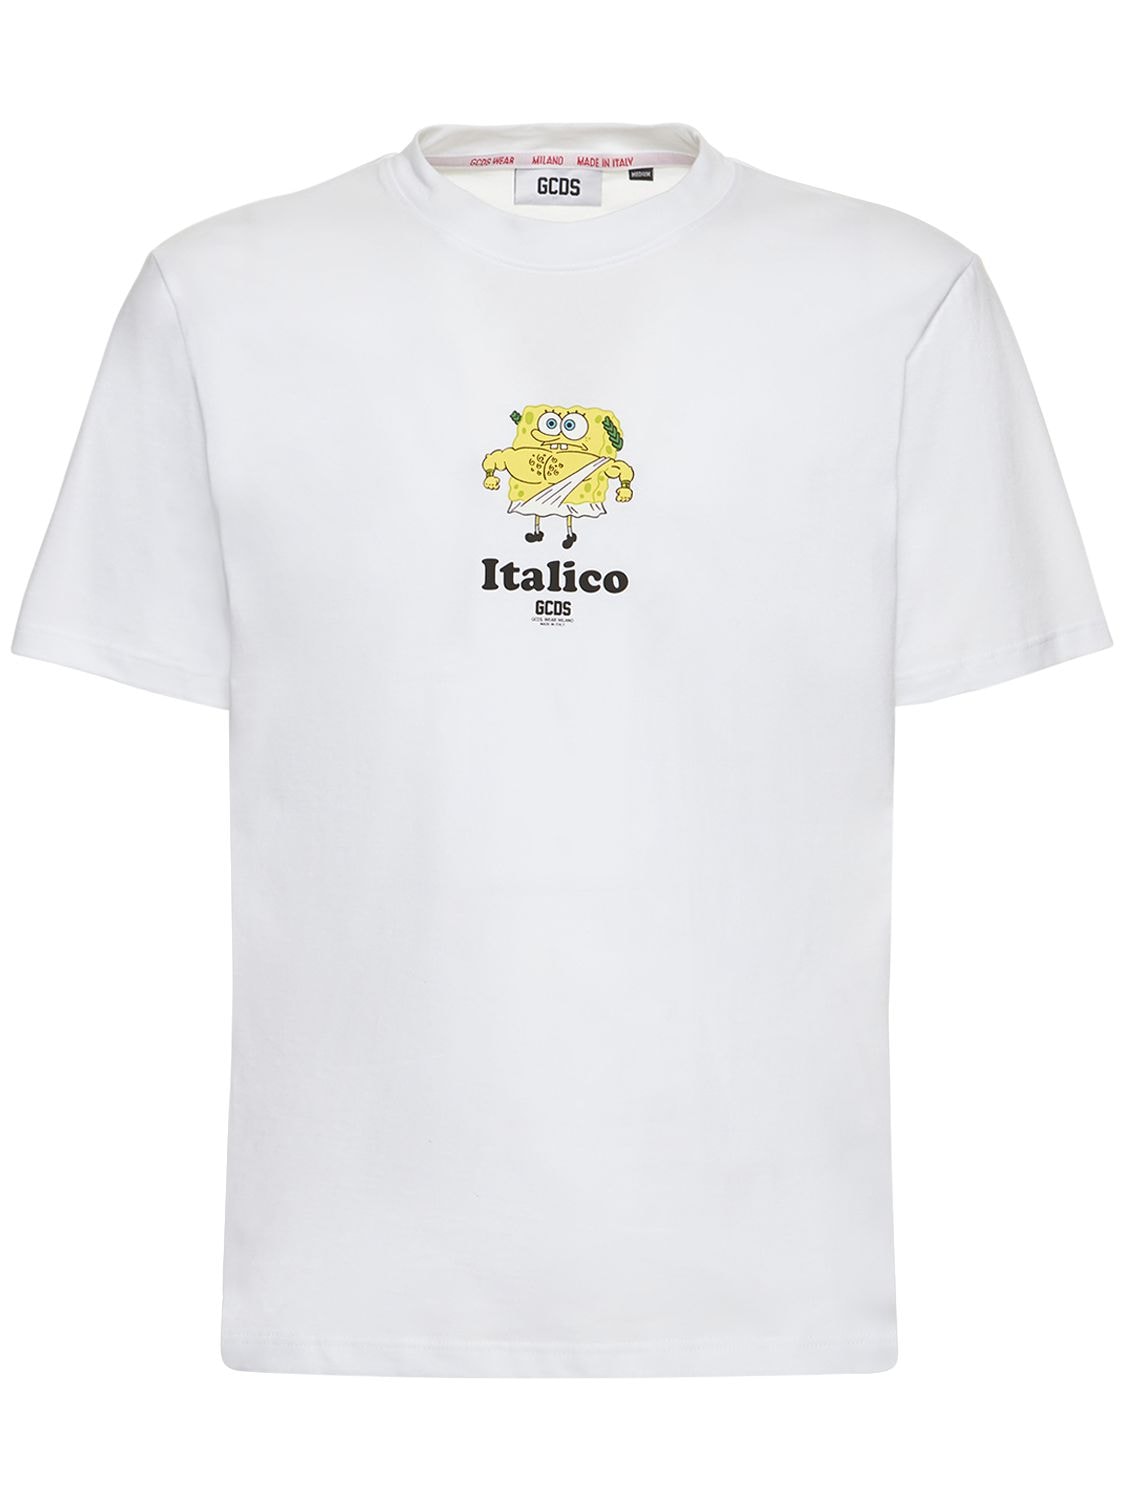 Gcds X Spongebob Italico T-shirt In White